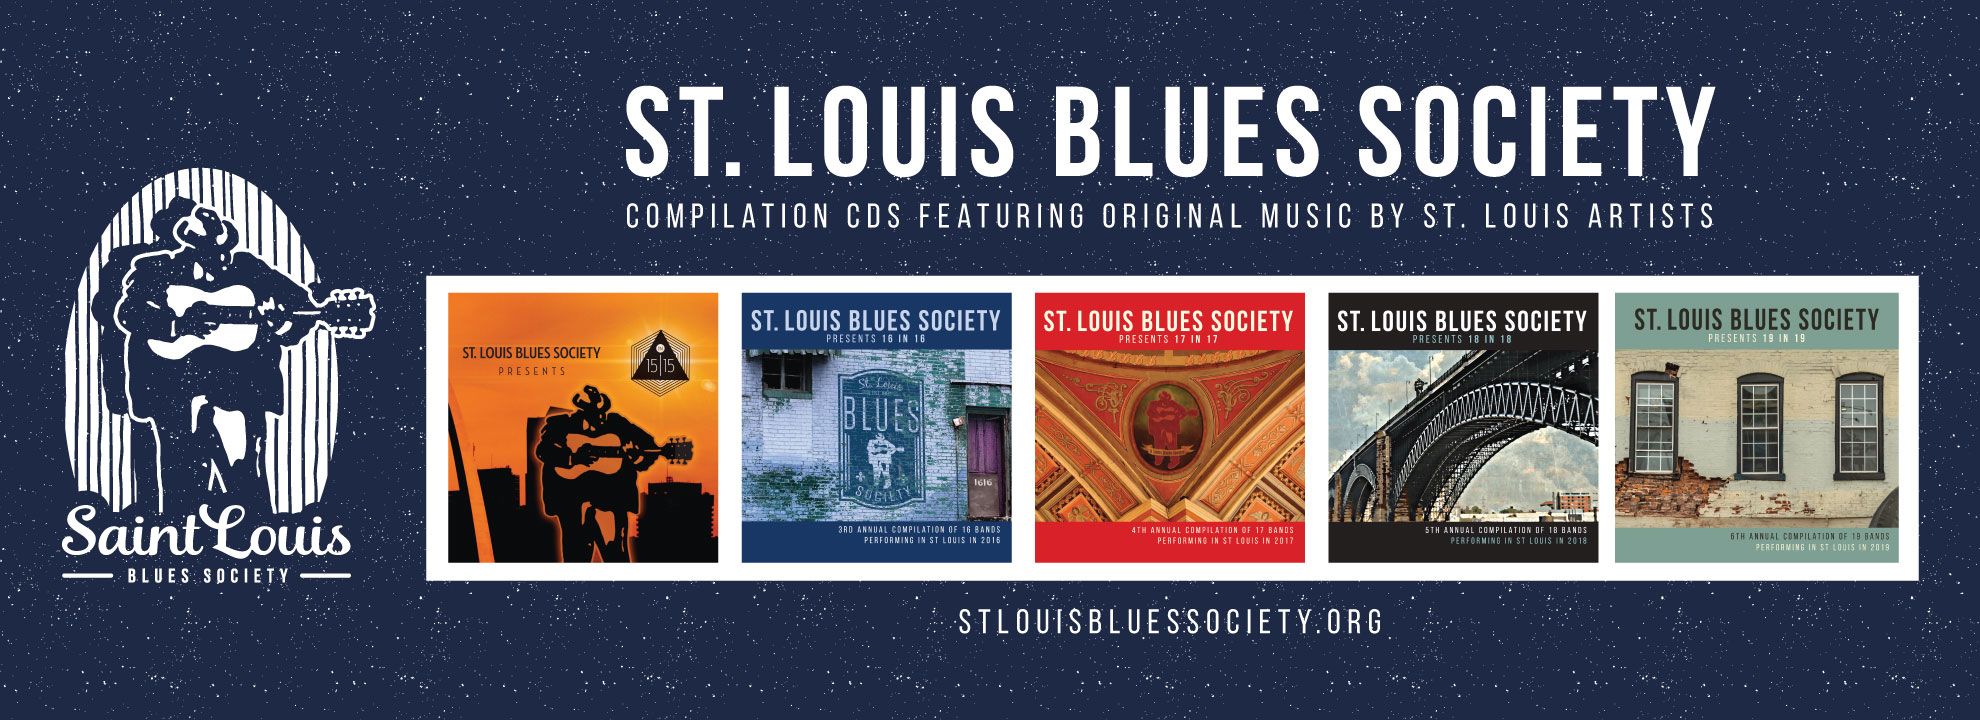 St. Louis Blues - Let's party like it's 1995 🎶